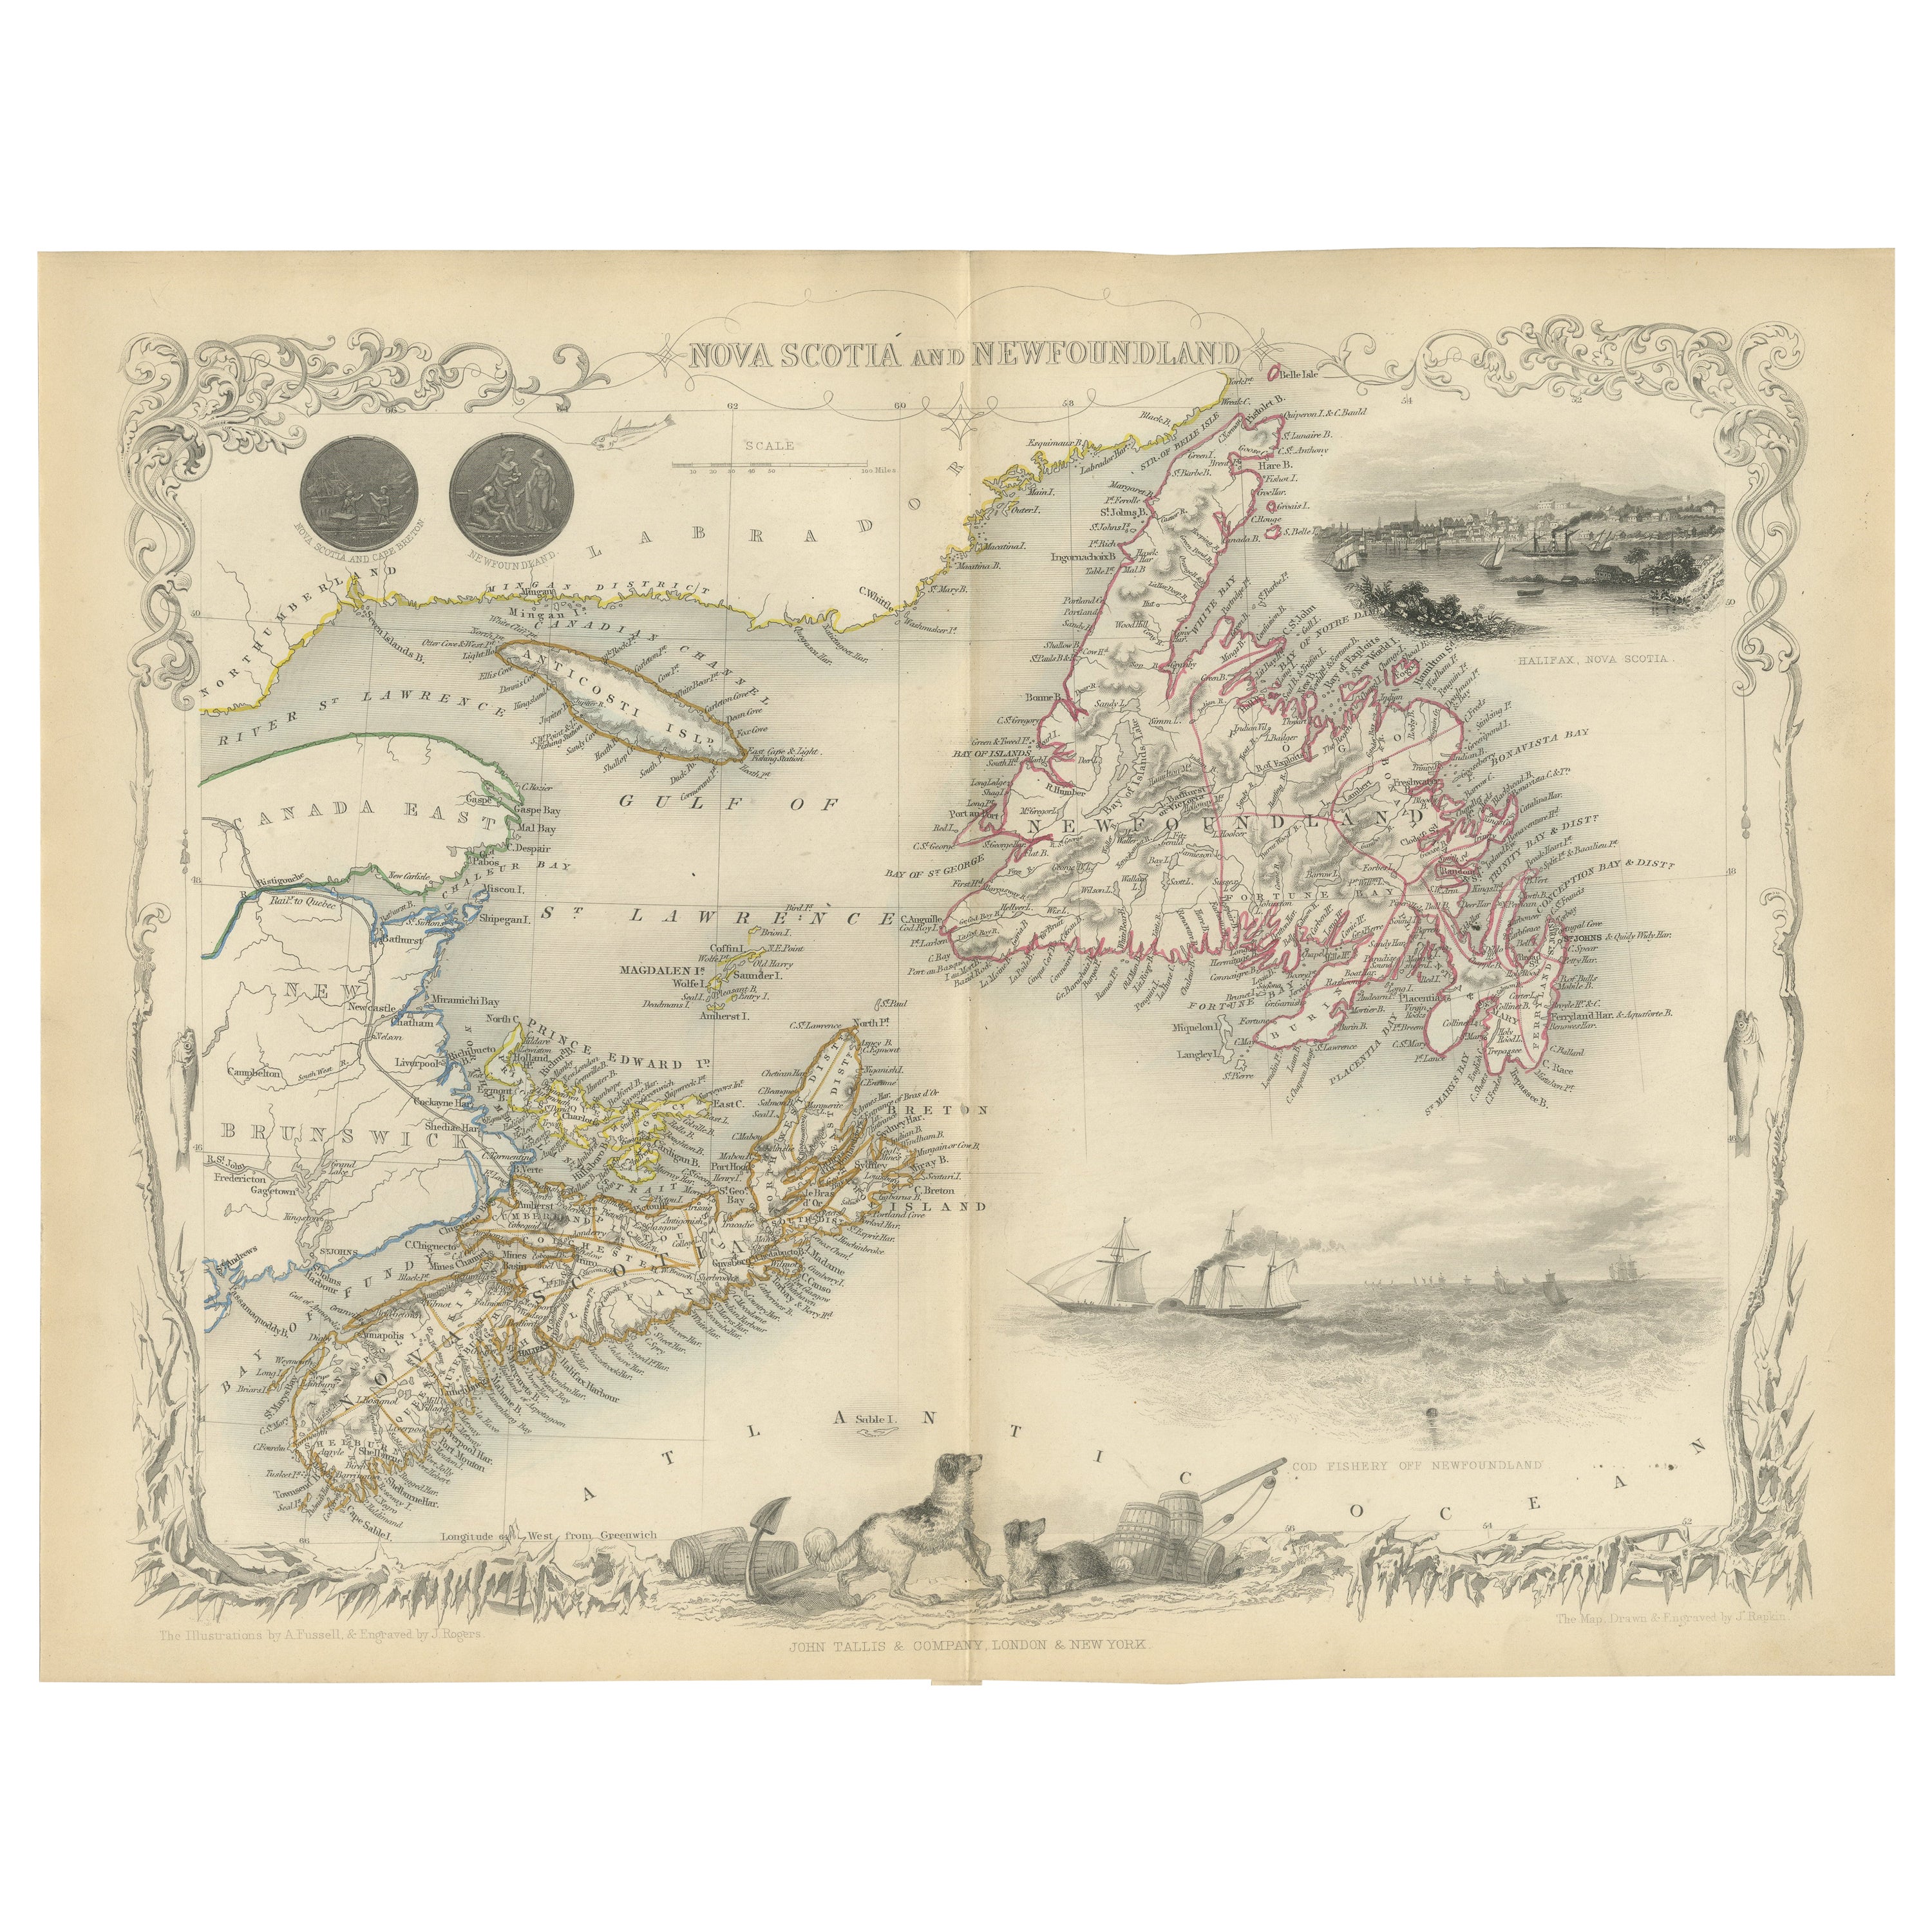 A Decorative Map of Nova Scotia and Newfoundland by John Tallis, 1851